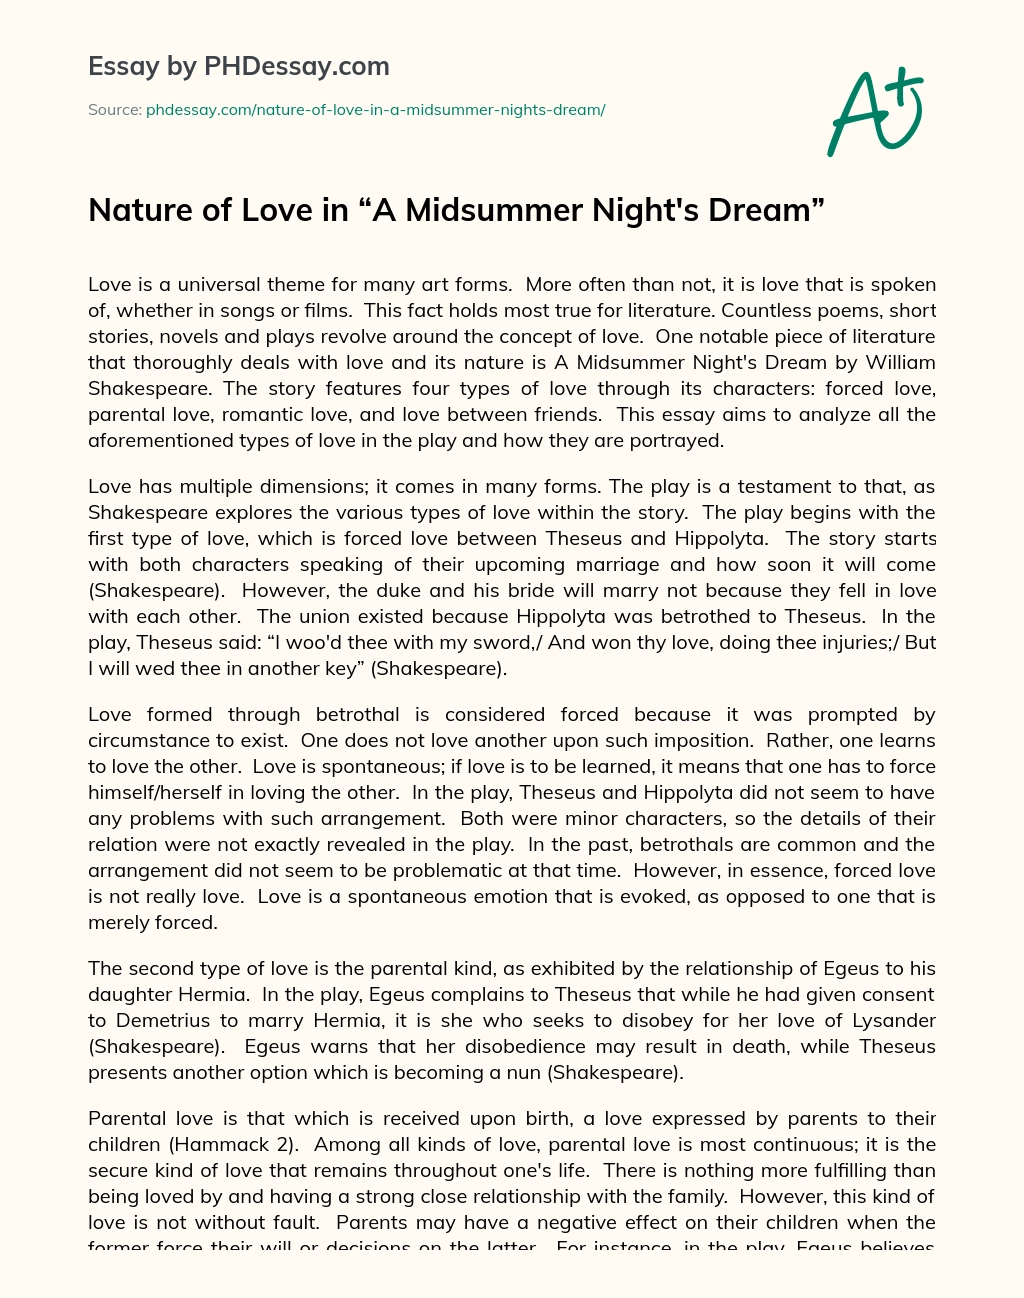 Nature of Love in “A Midsummer Night’s Dream” essay